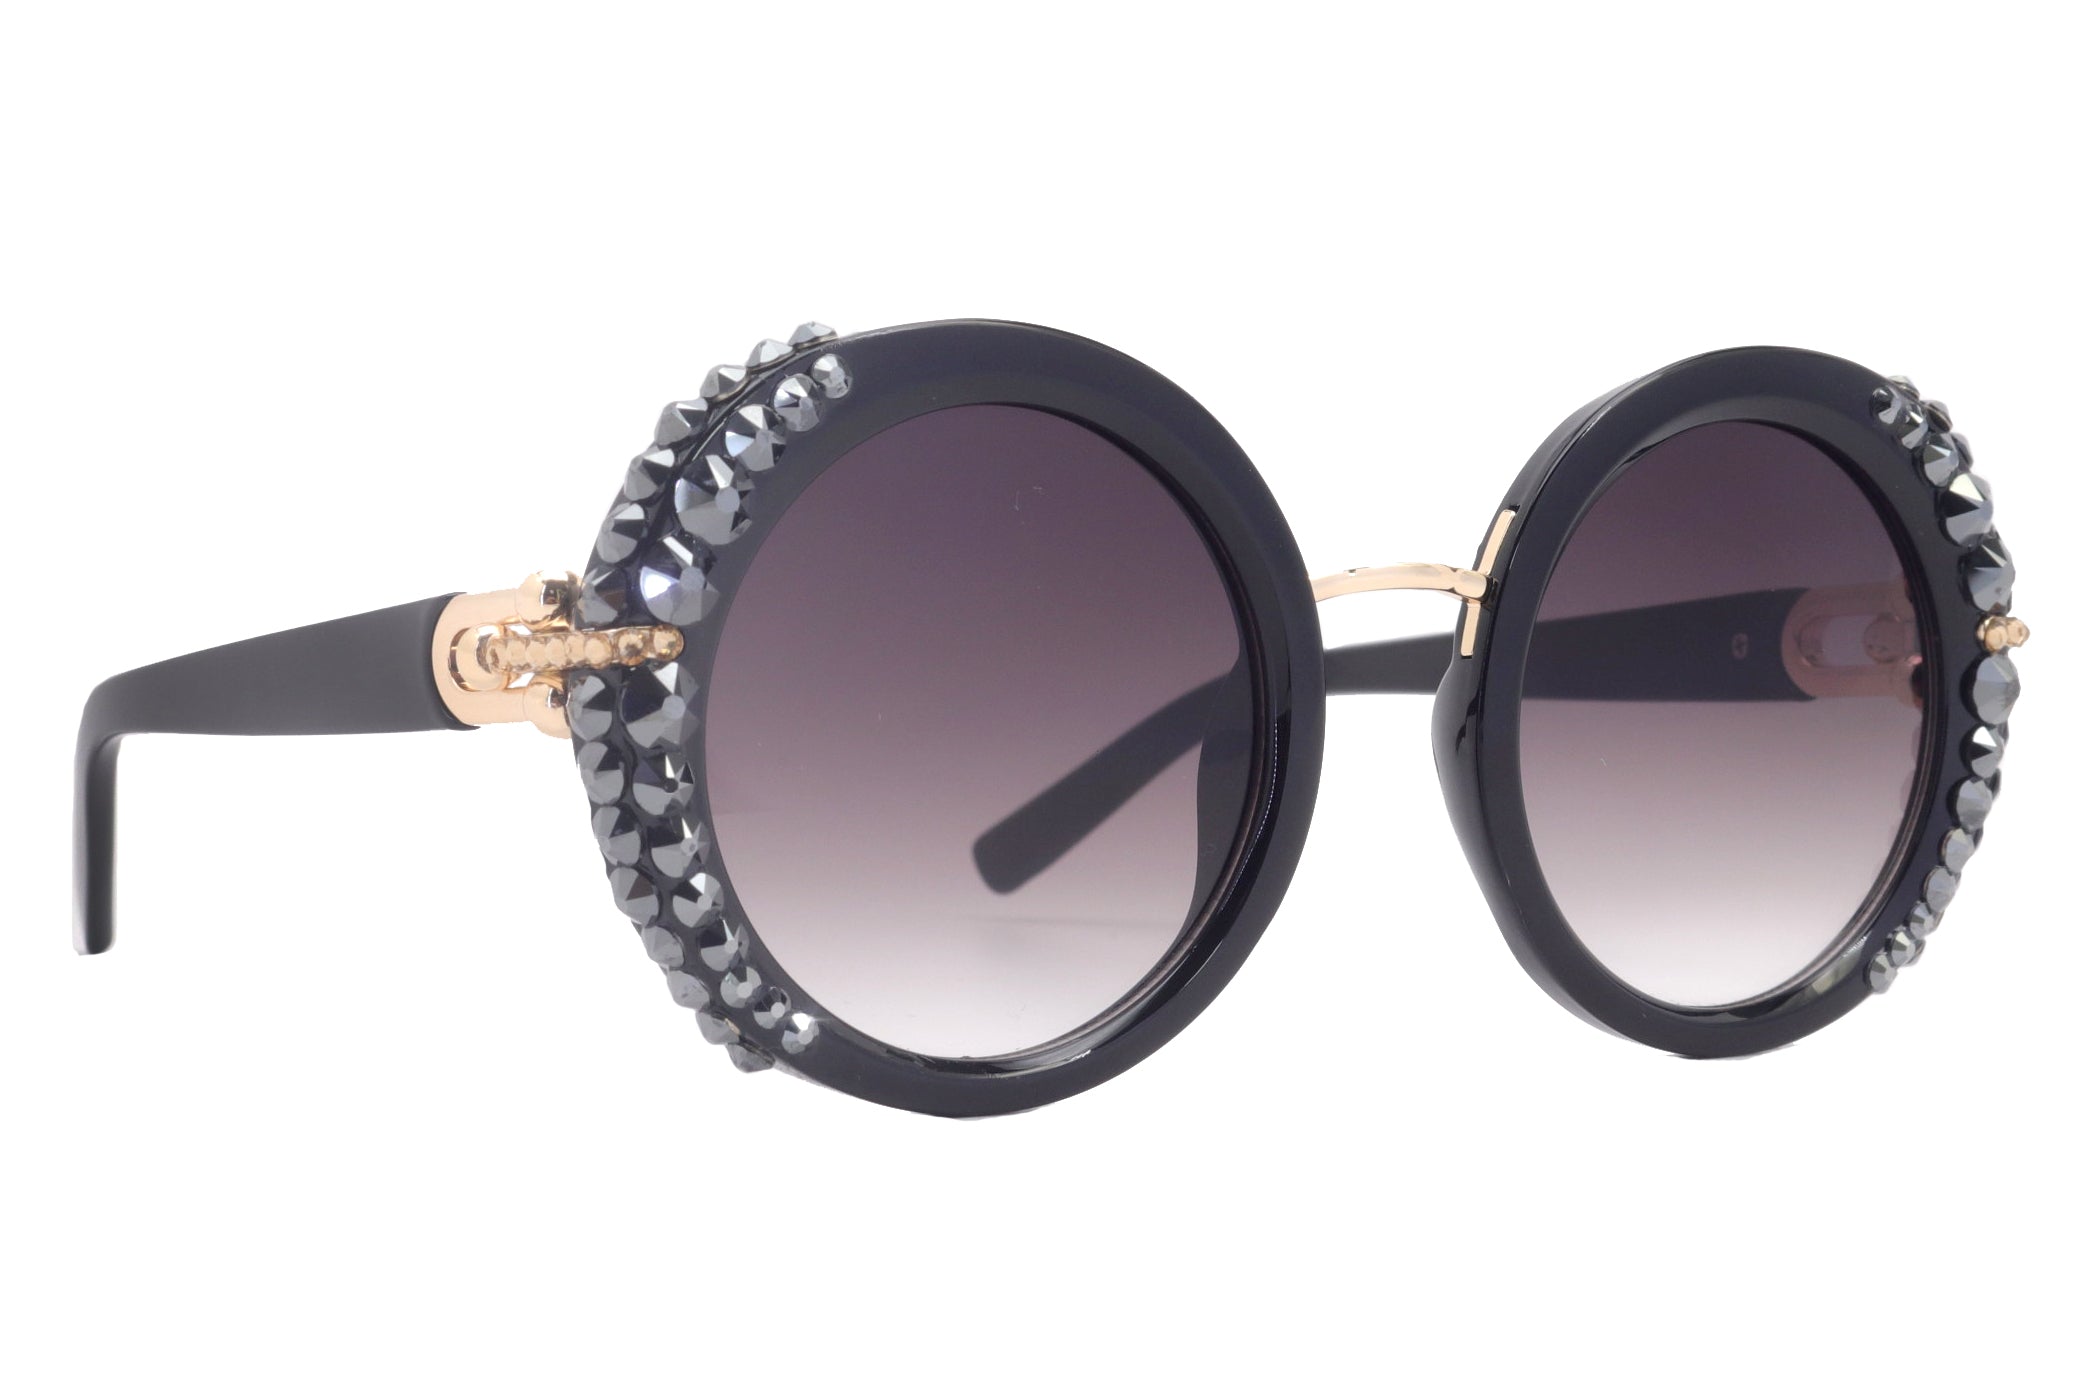 Chanel Black Sunglasses Rhinestone Glasses D, Tokyo Roses Vintage